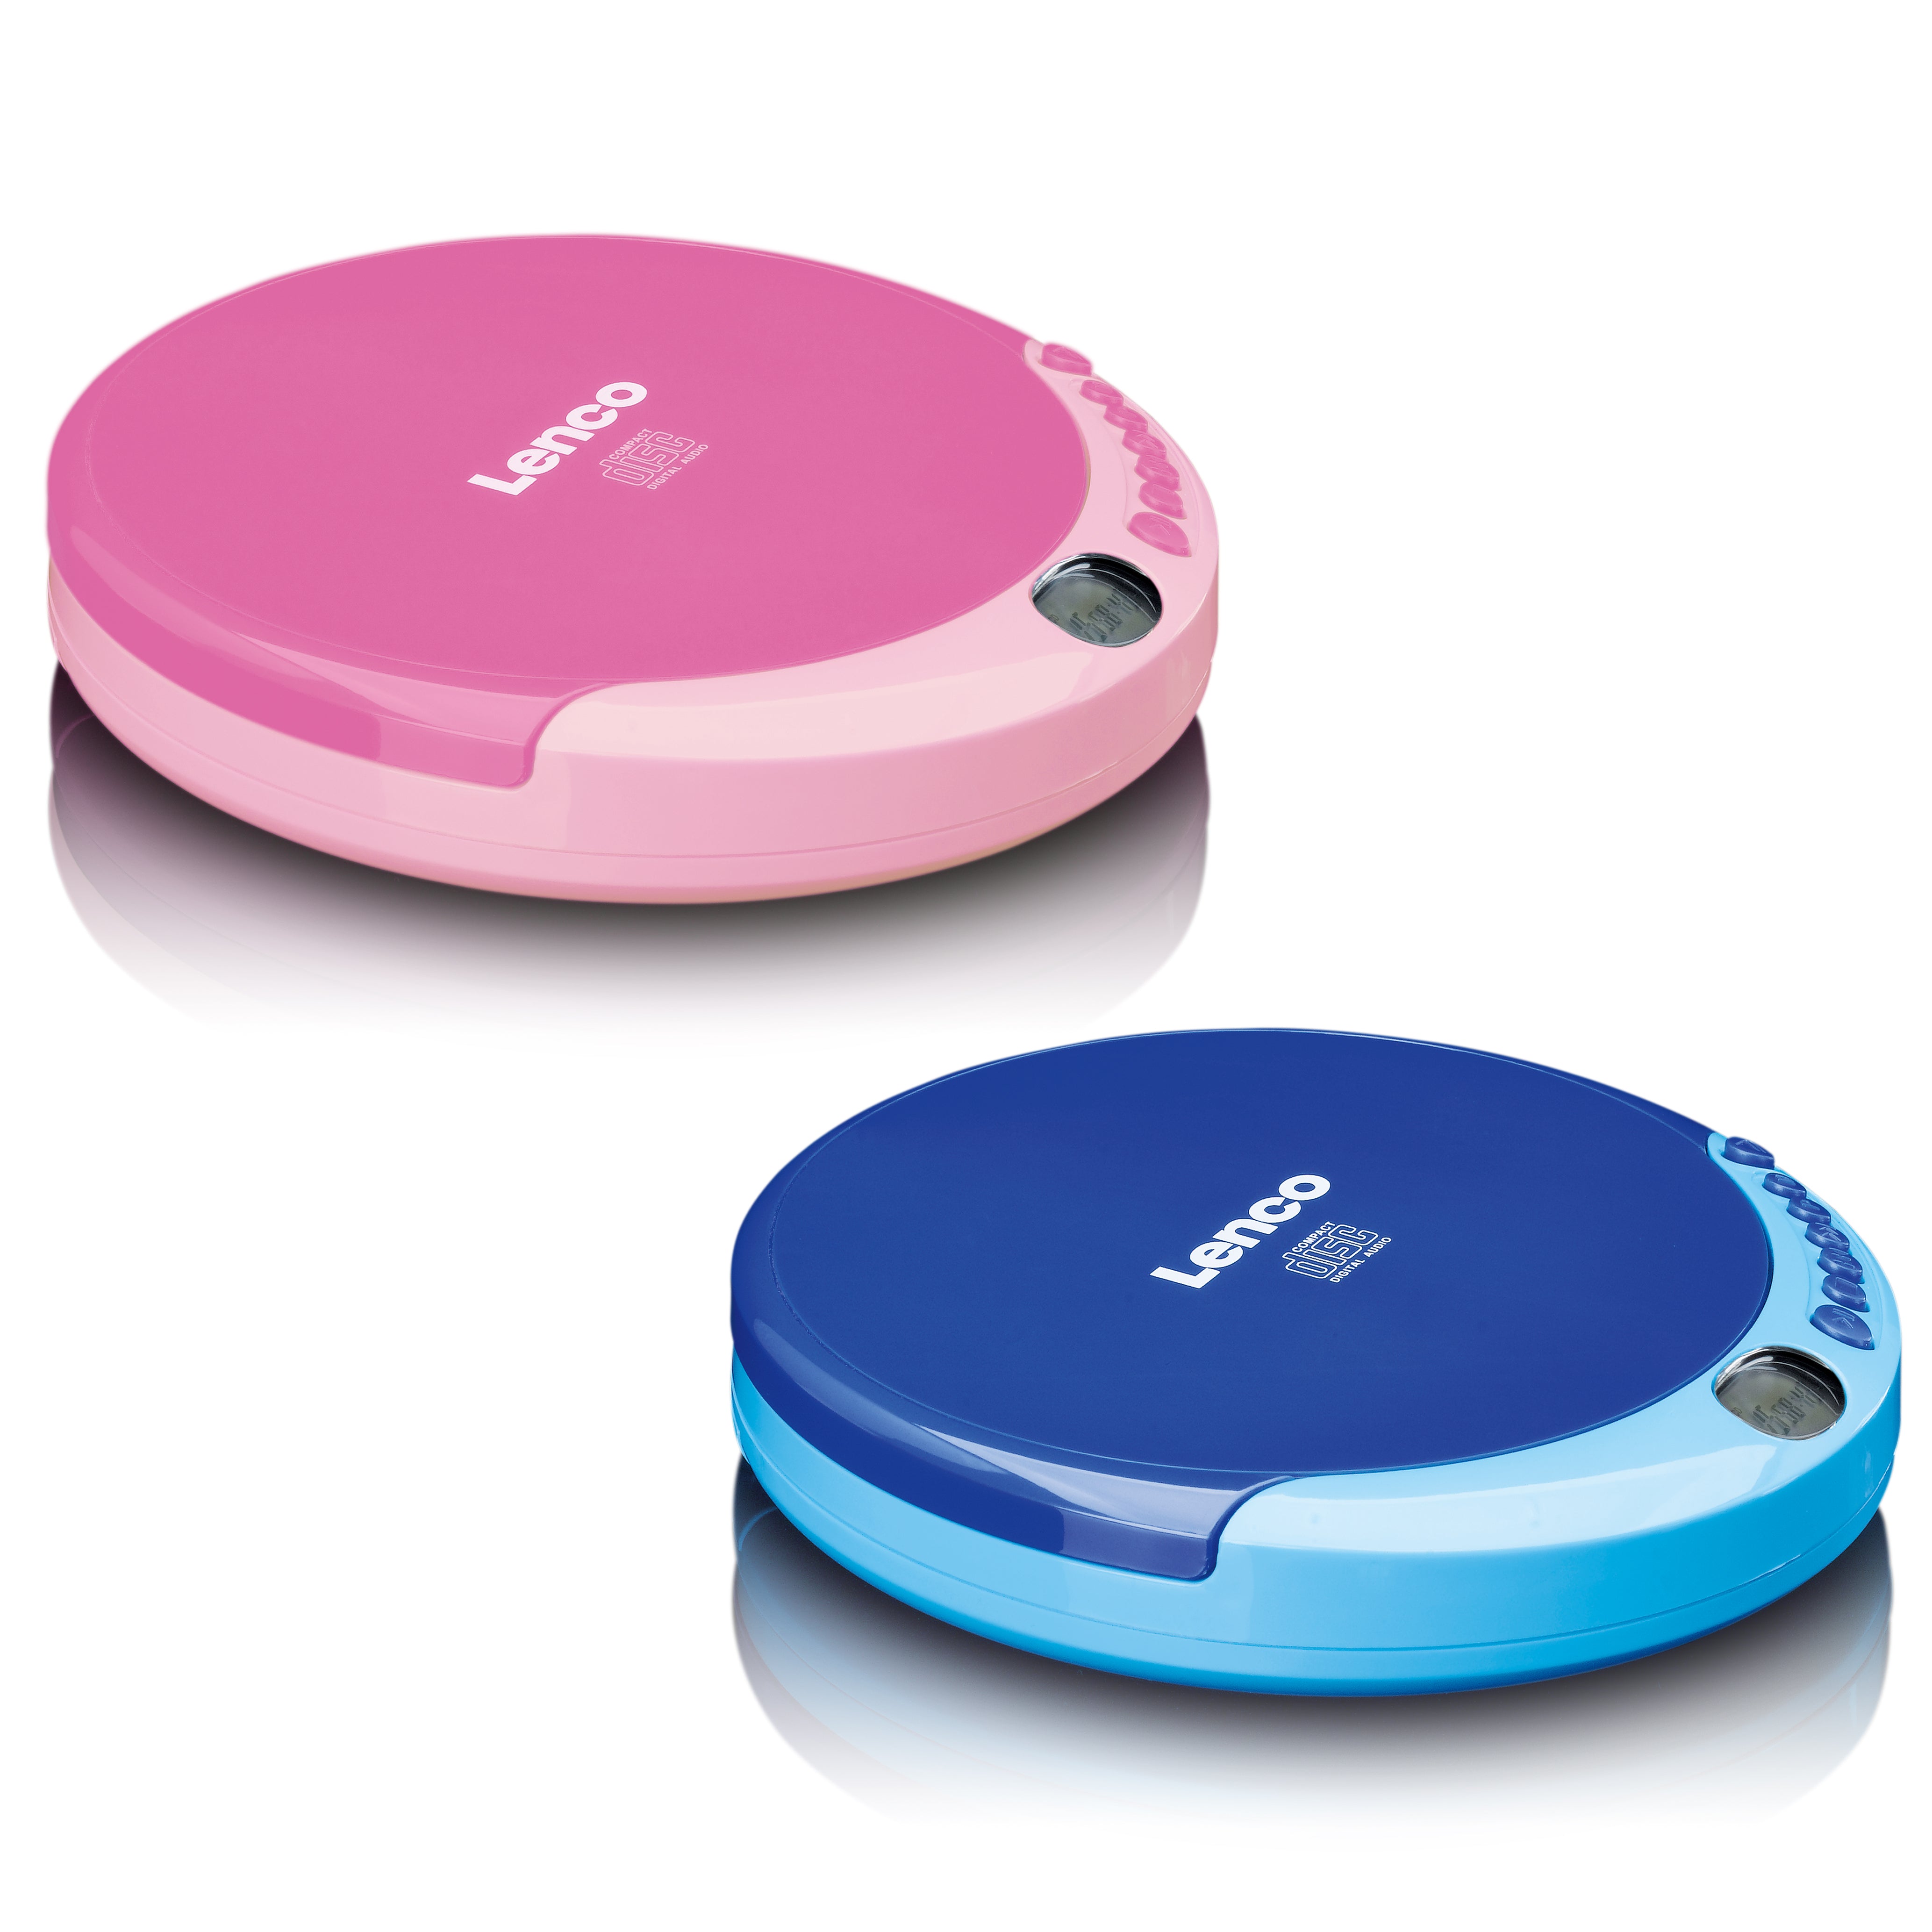 LENCO CD-011PK - Portable CD player - Pink